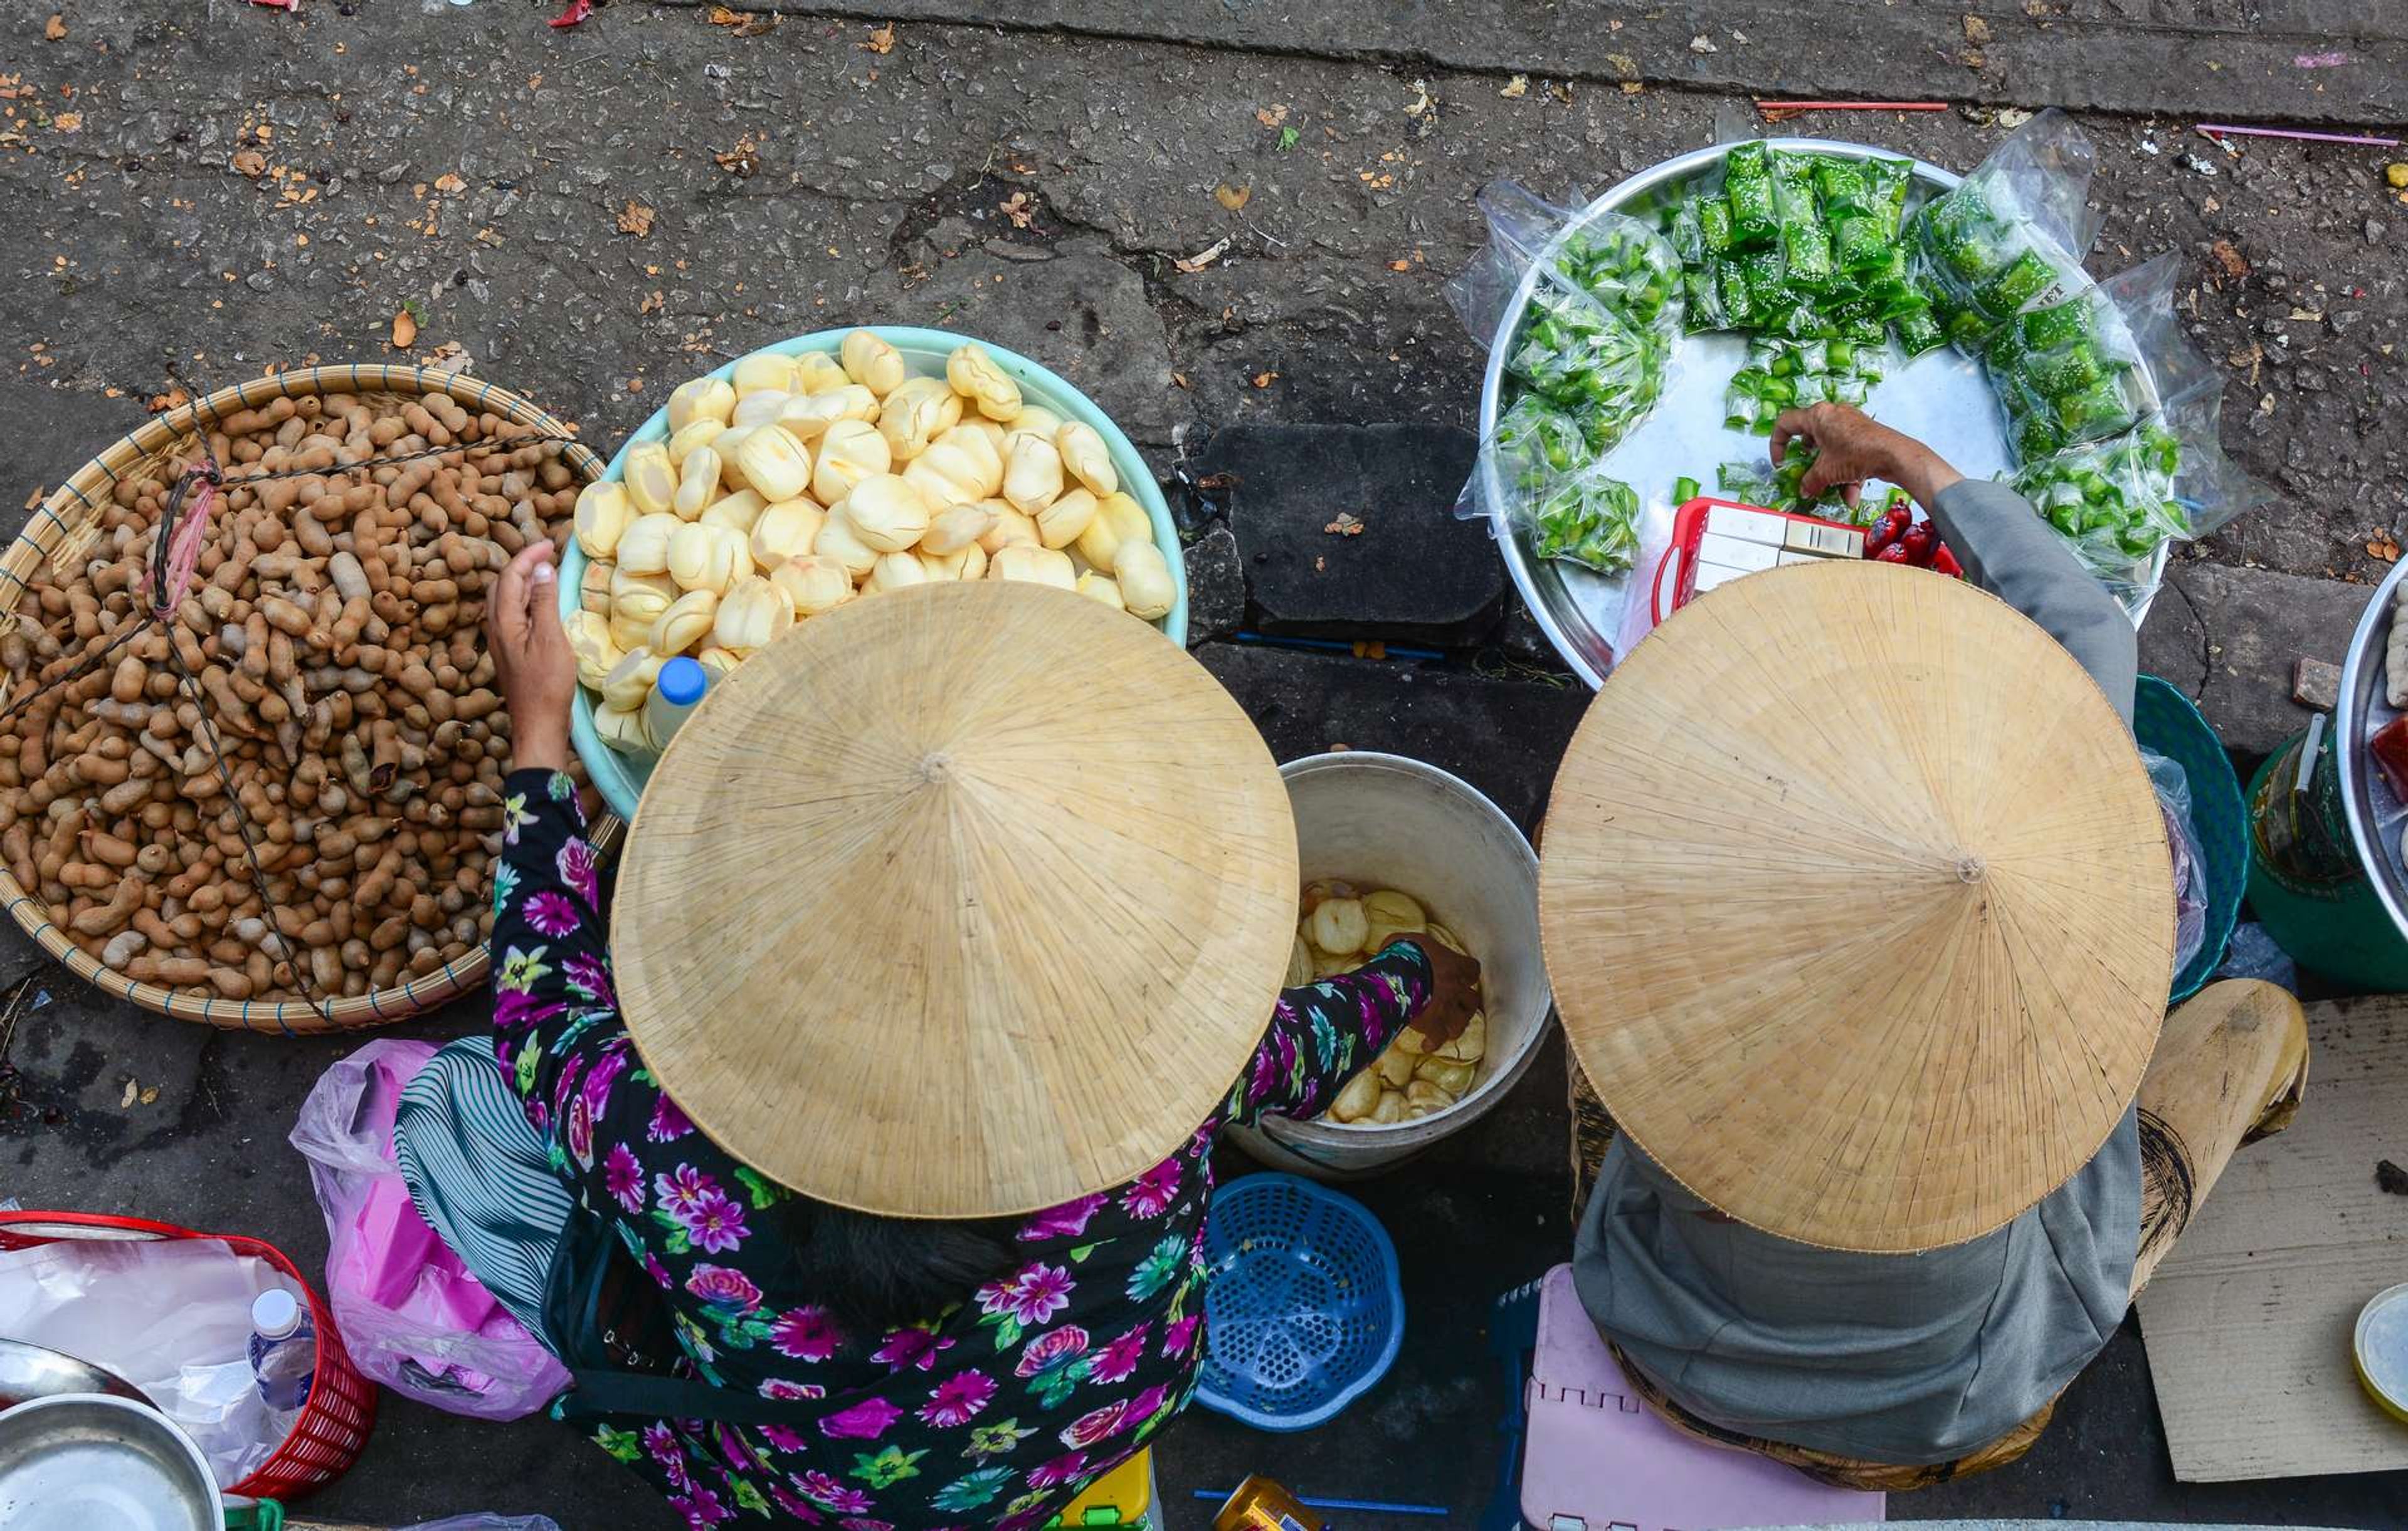 Vietnam Saigon (Ho Chi Minh city) Vendors sell snacks on street